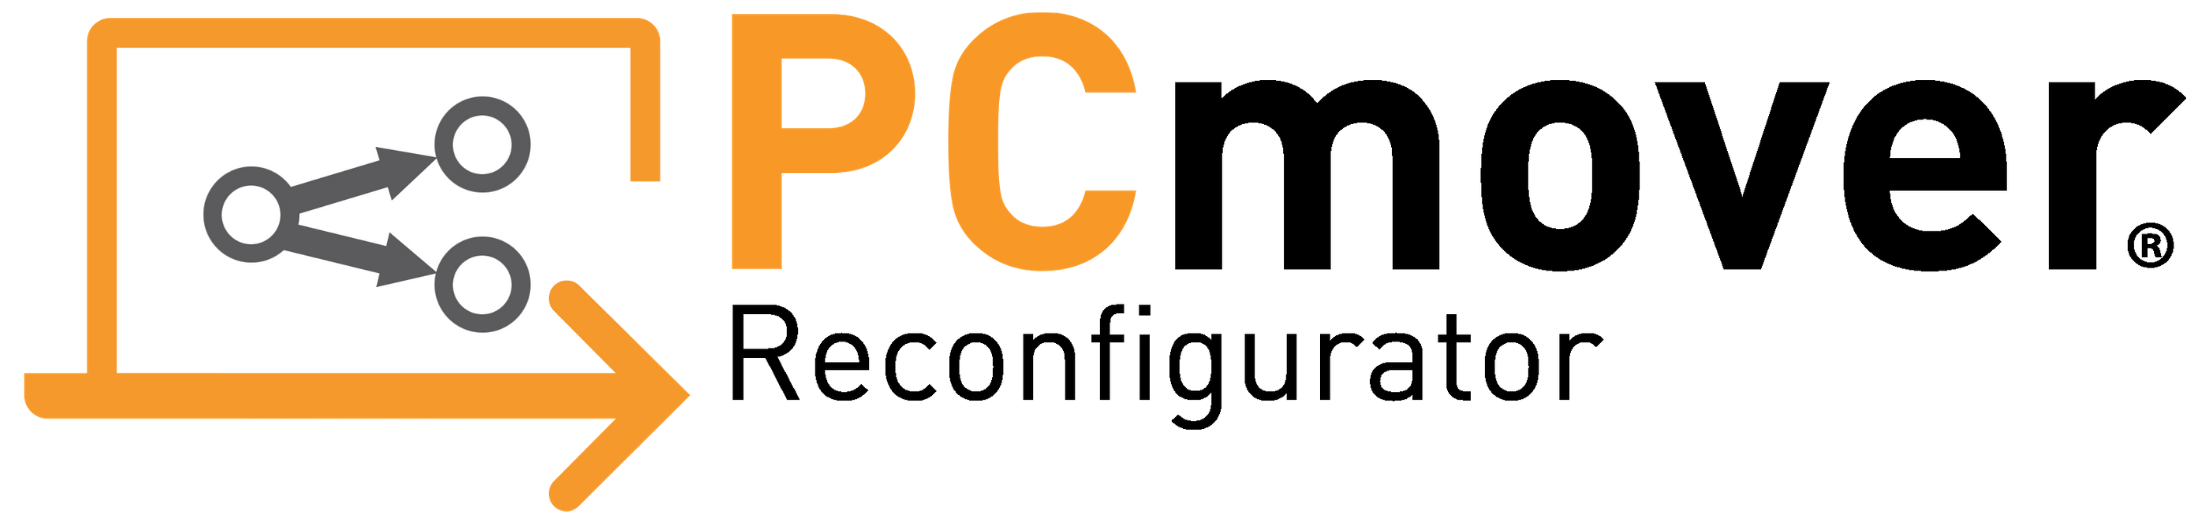 PCmover Reconfigurator Logo